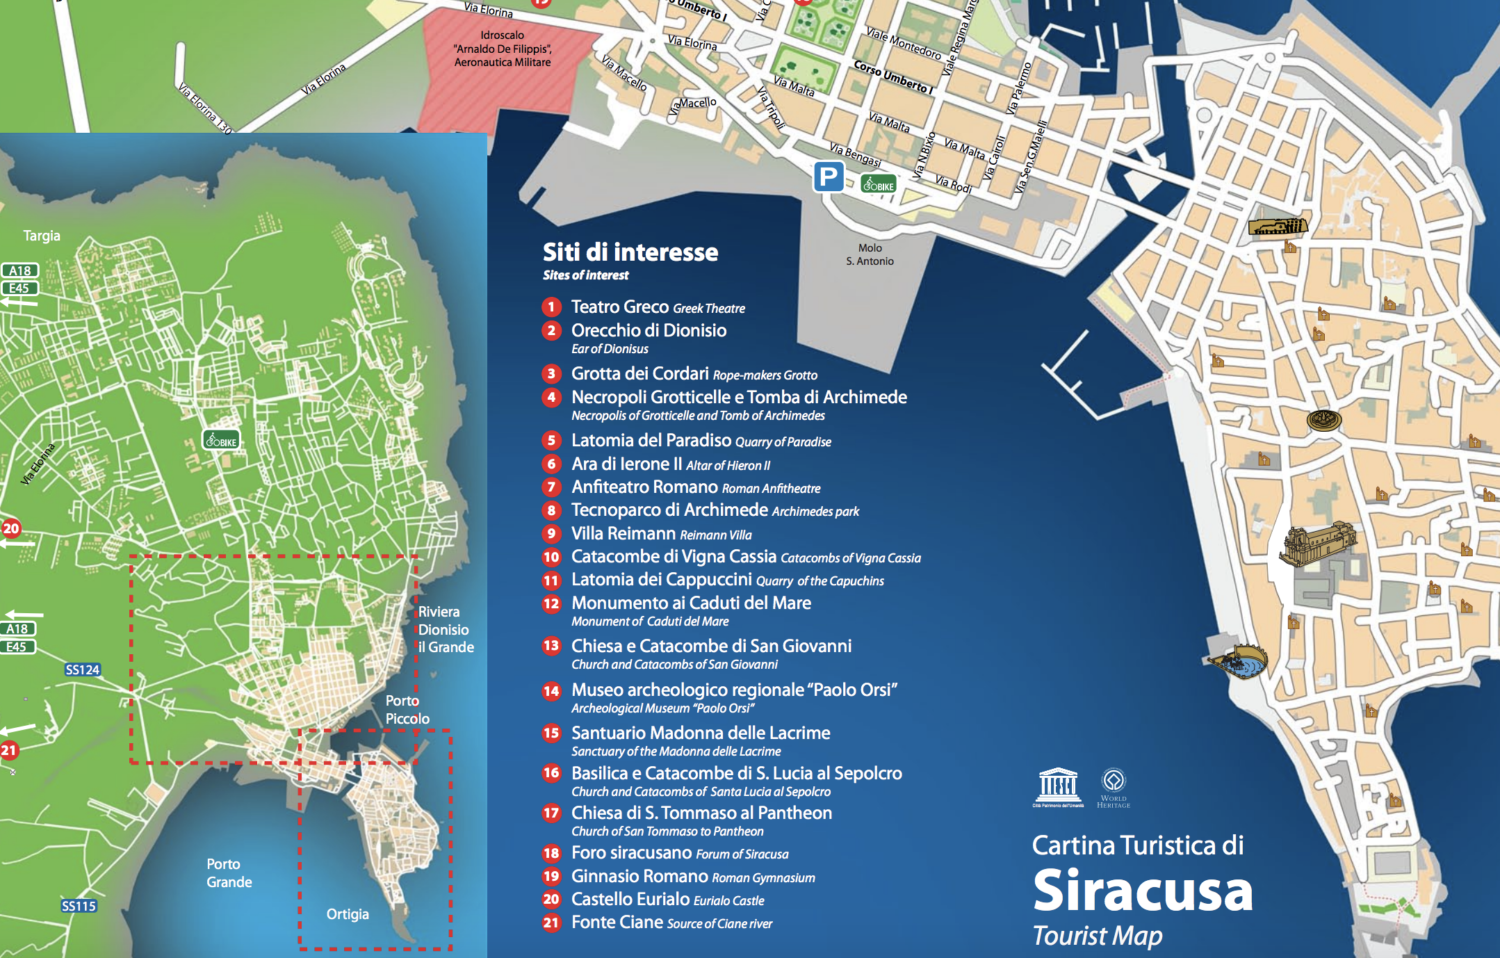 Siracusa Tourist Map